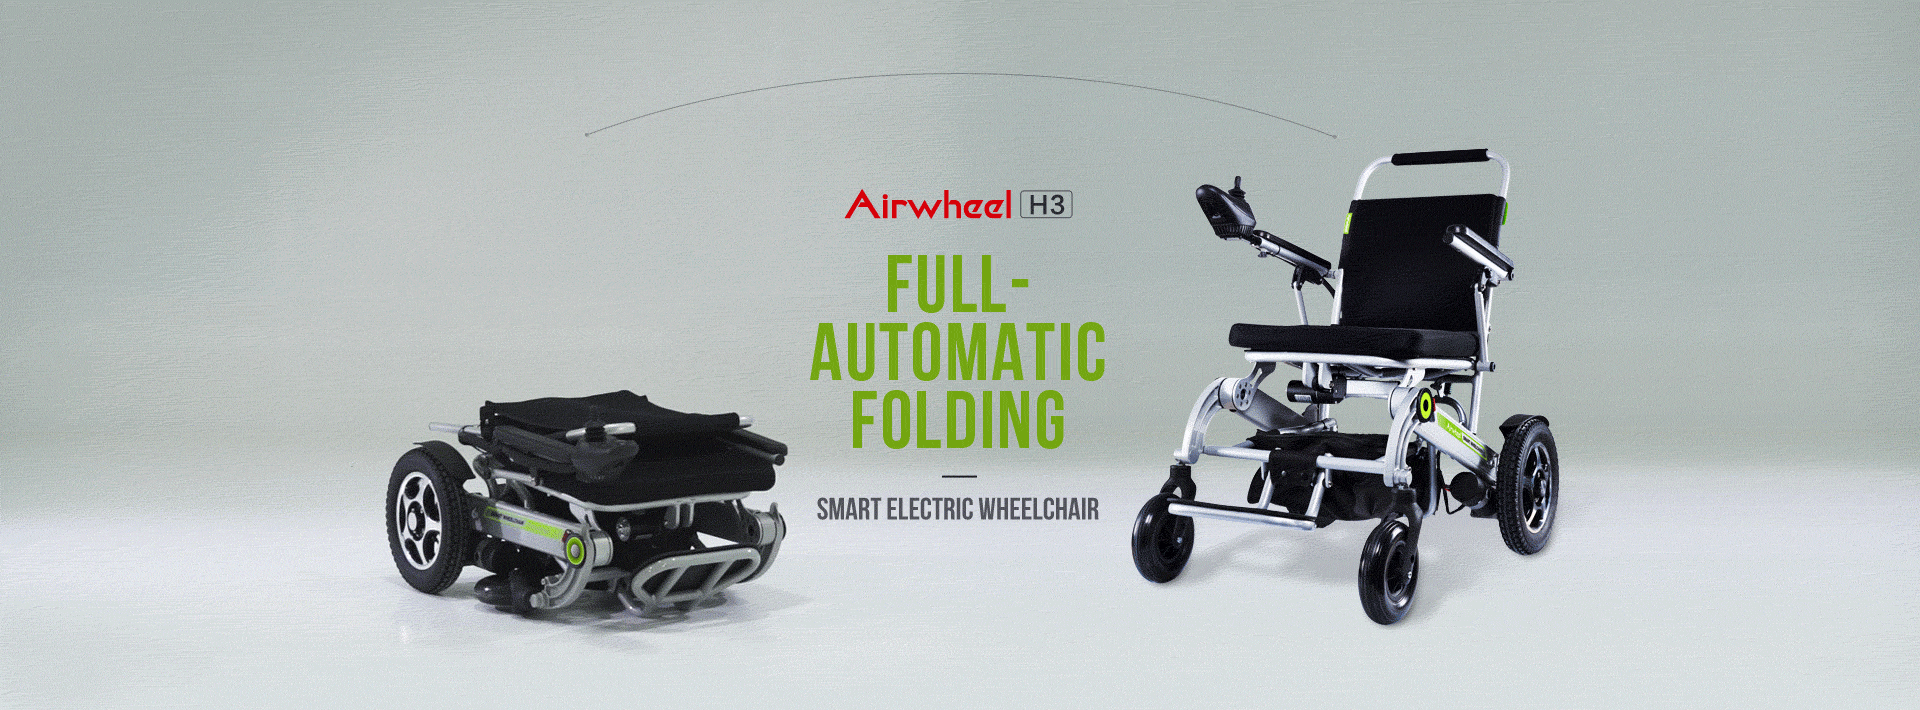 Airwheel H3 electric folding wheelchair